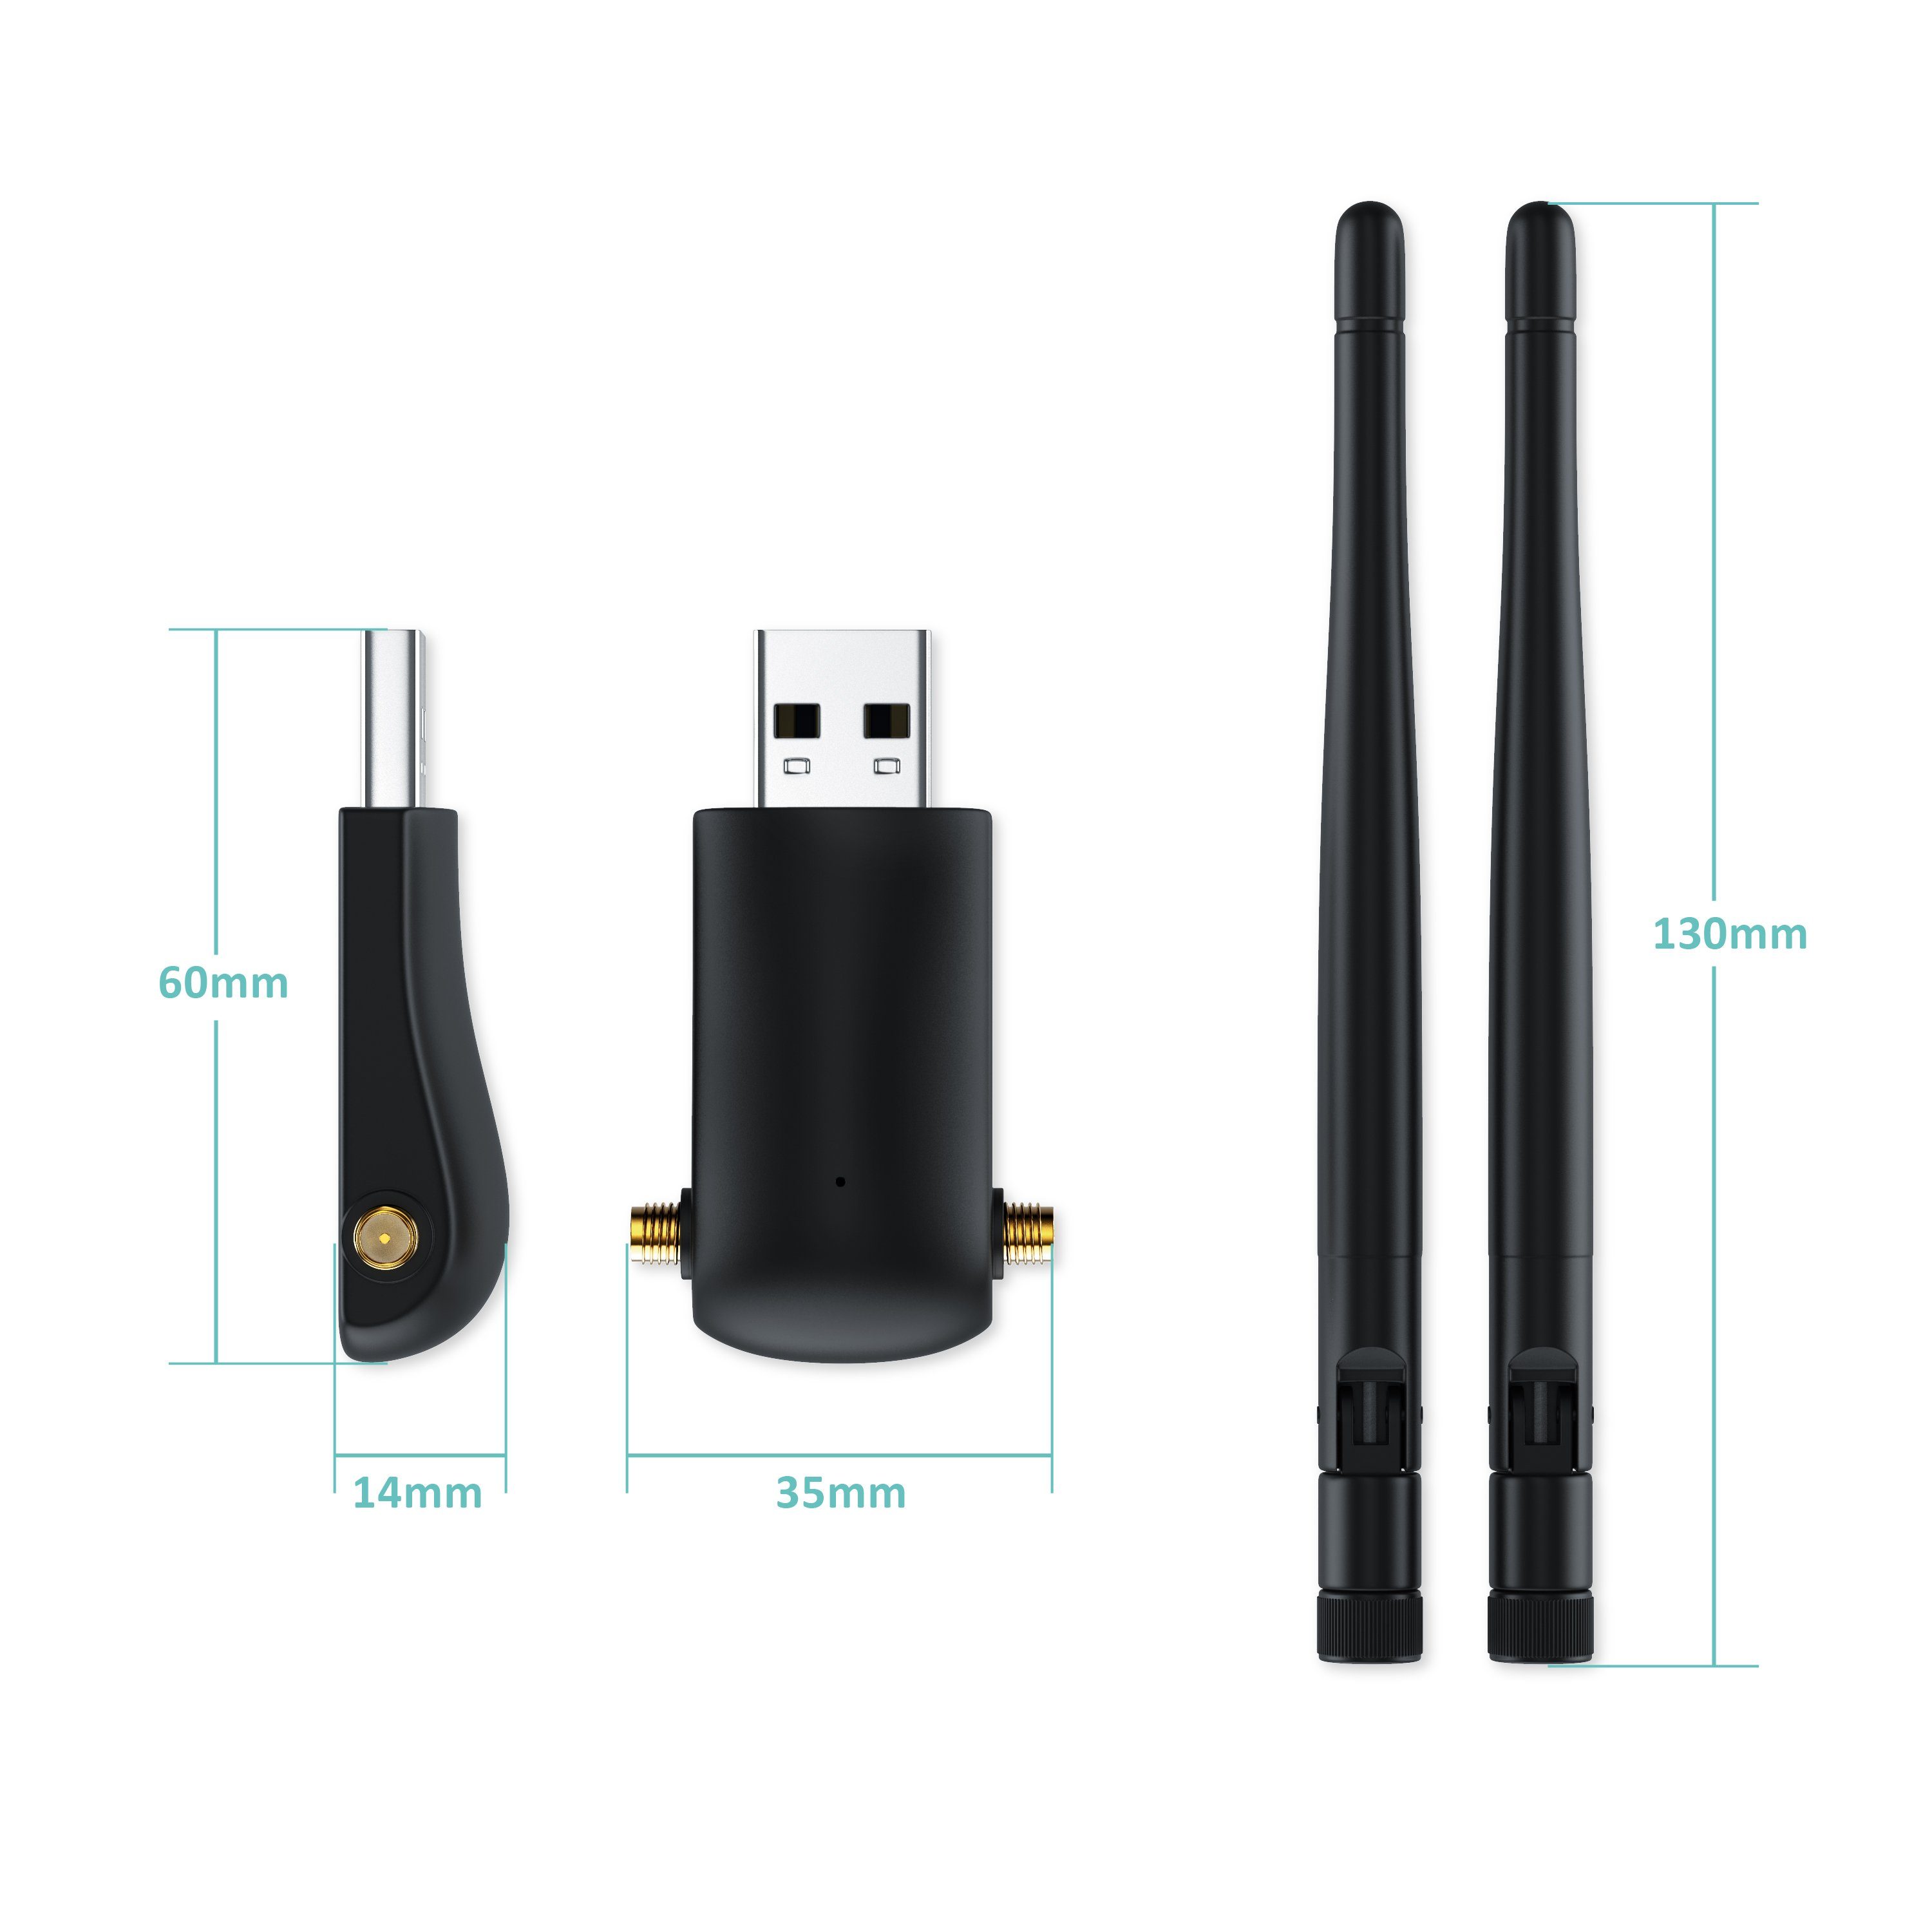 Dongle Ghz USB3.0, 2,4 Dual Aplic MBit/s externe + 1200 Band WIFI WLAN-Stick, Antennen 5